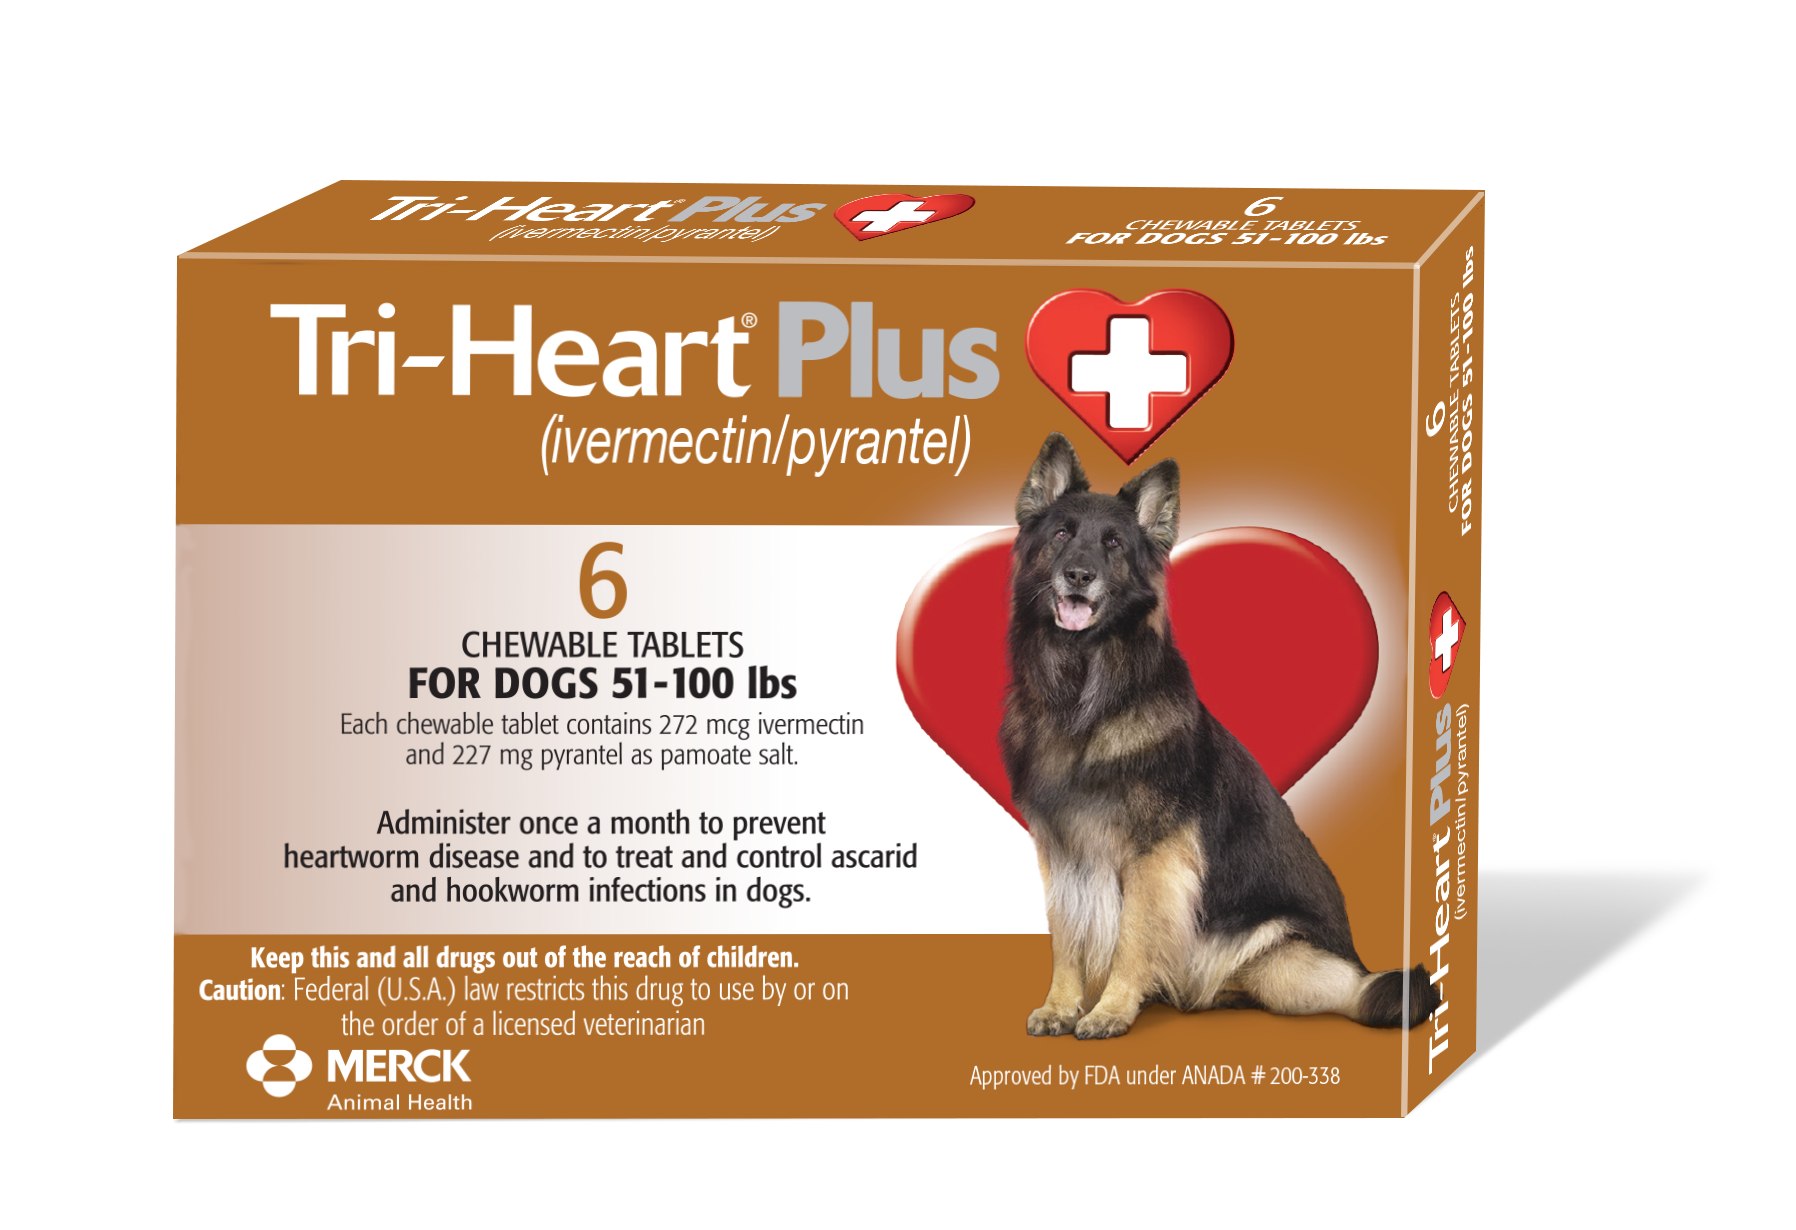 TRIHEART® PLUS Chewable Tablets (ivermectin/pyrantel) Merck Animal